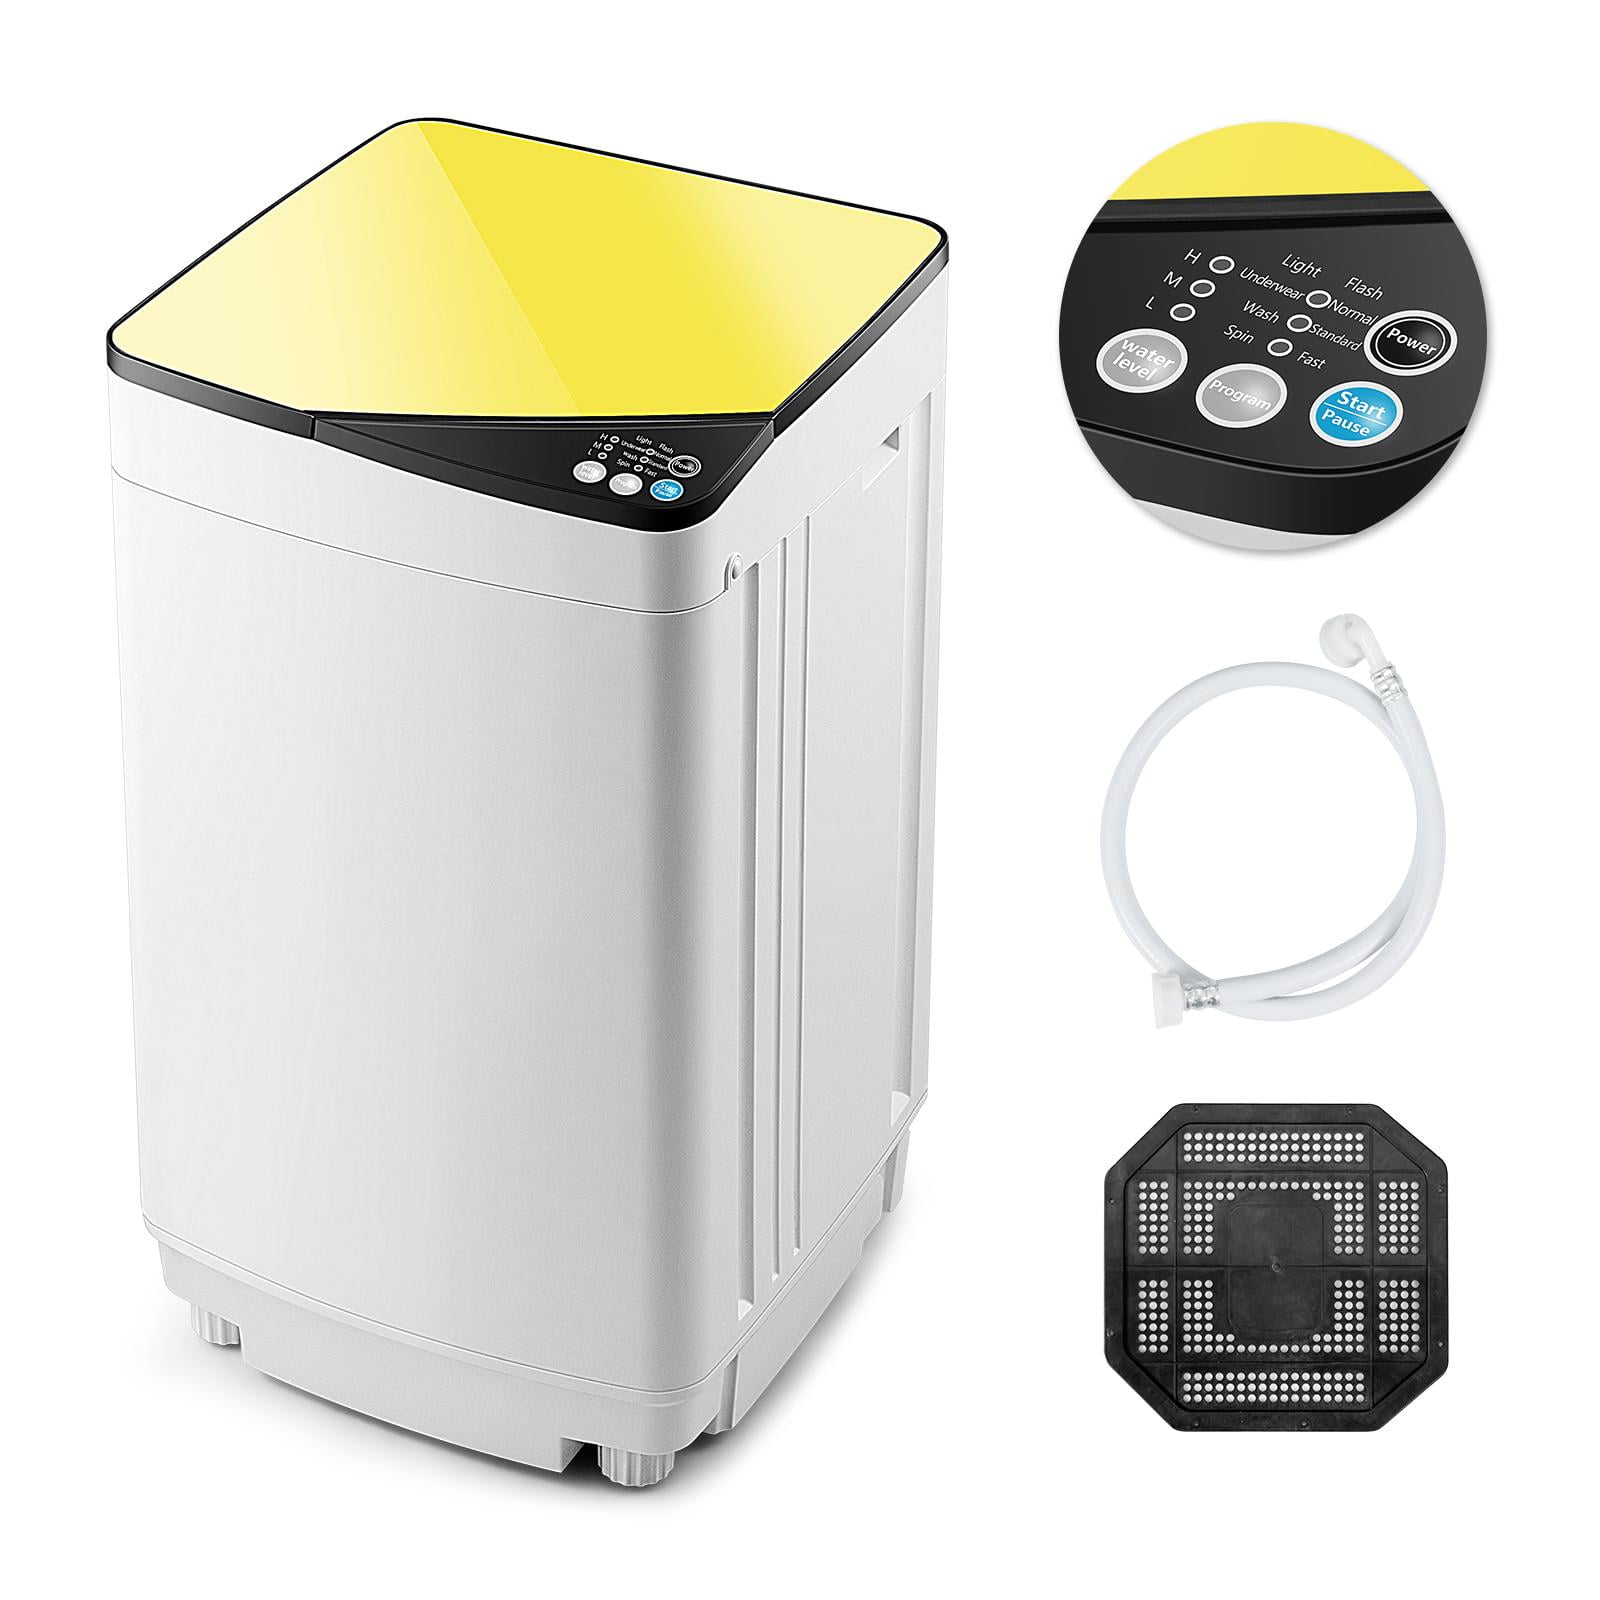 Qhomic Portable Washing Machine, 17.6lbs Large Capacity Fully